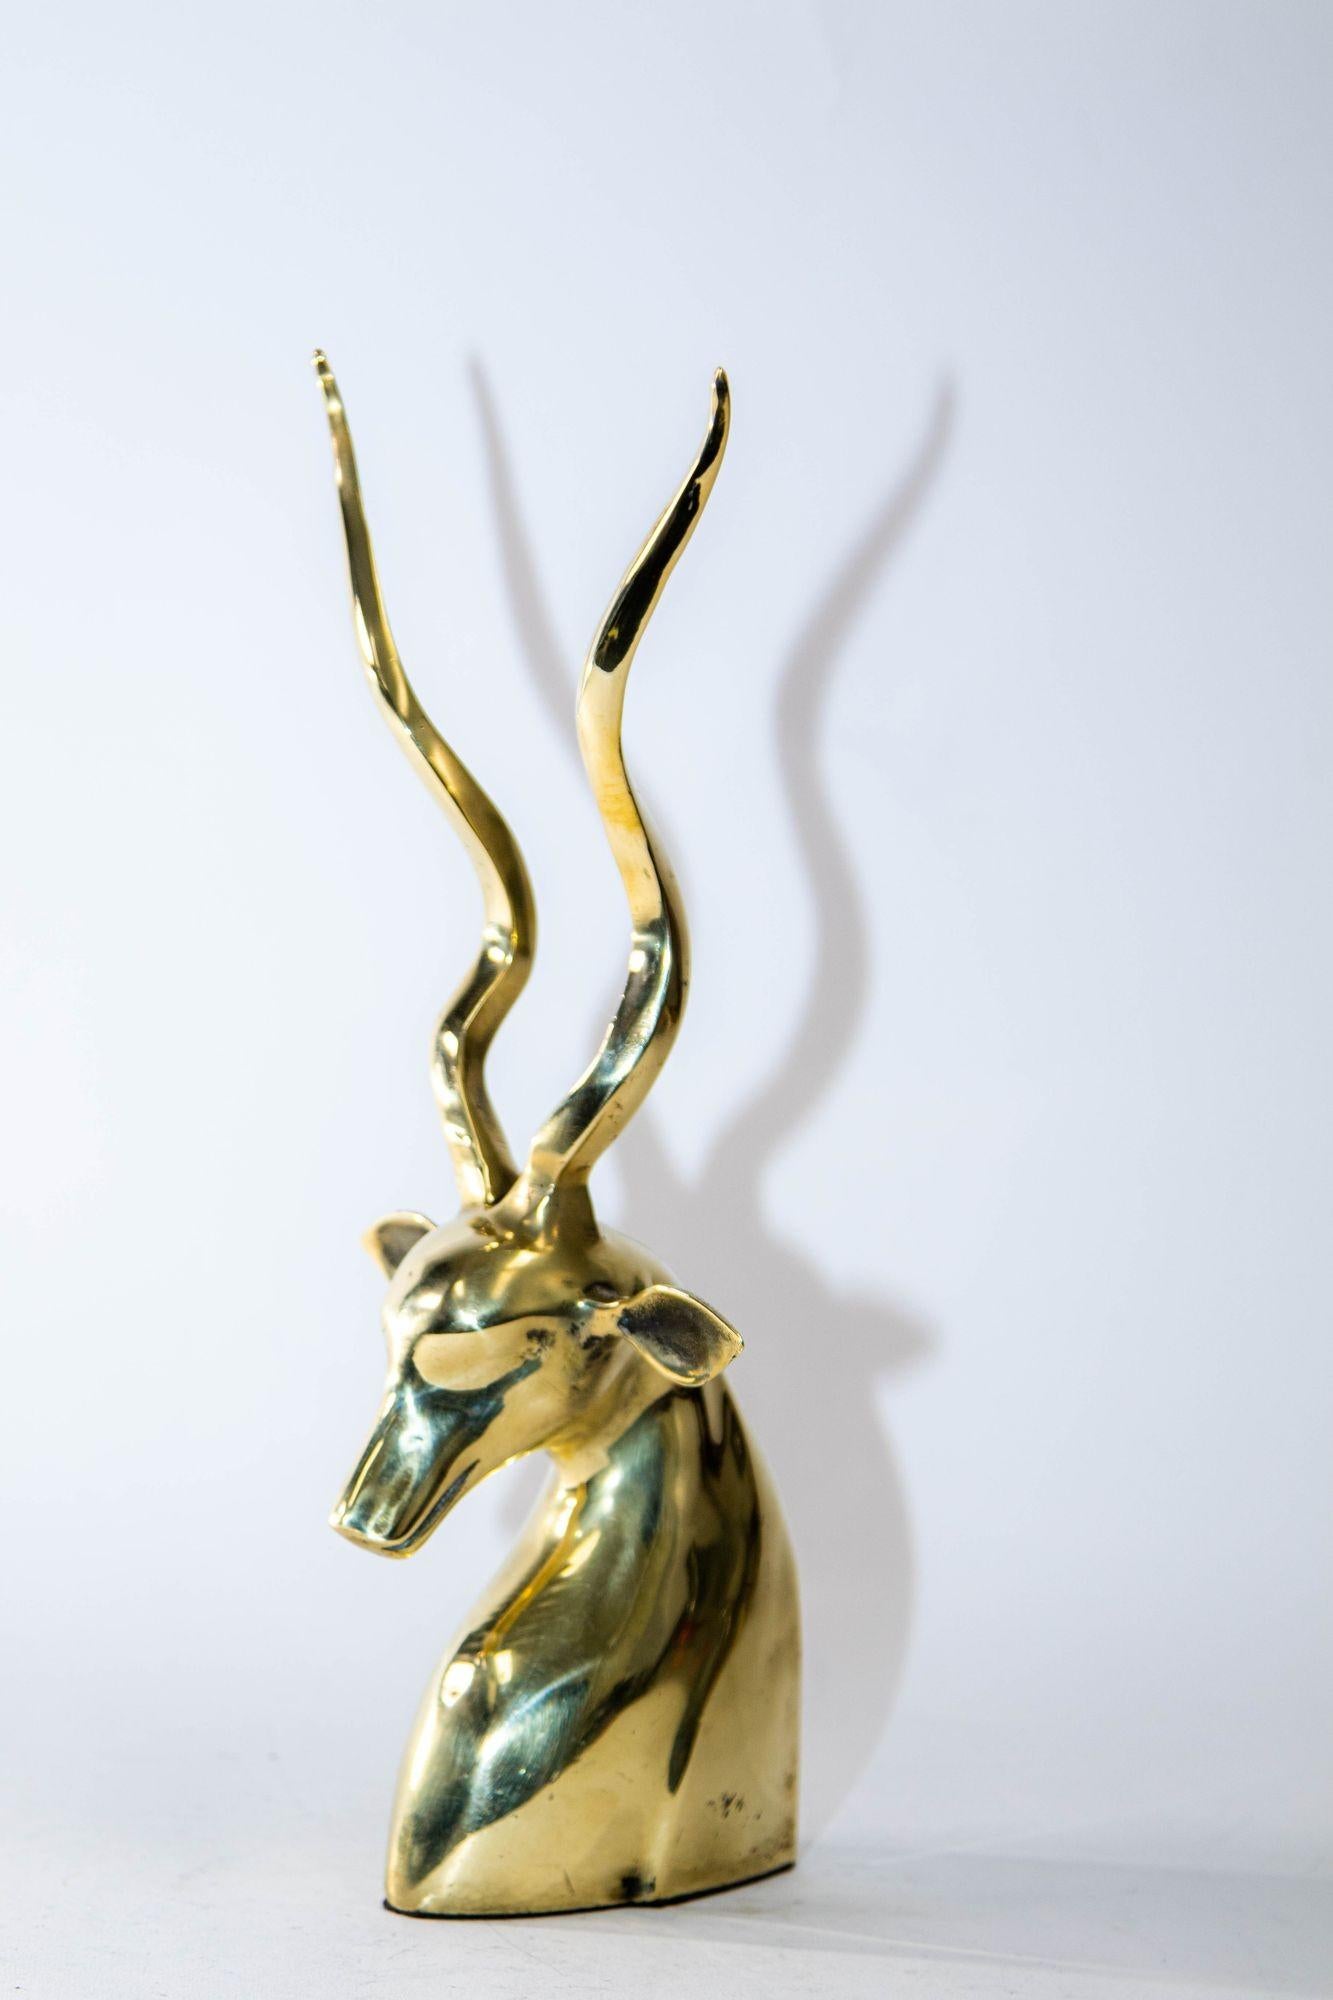 Art Deco style brass decorative antelope gazelle or kudu bust sculpture.
A brass animal Gazelle antelope bust sculpture decorative object with tall antlers.
Polished brass sculptural bust of an African Kudu antelope, similar to a gazelle, with tall